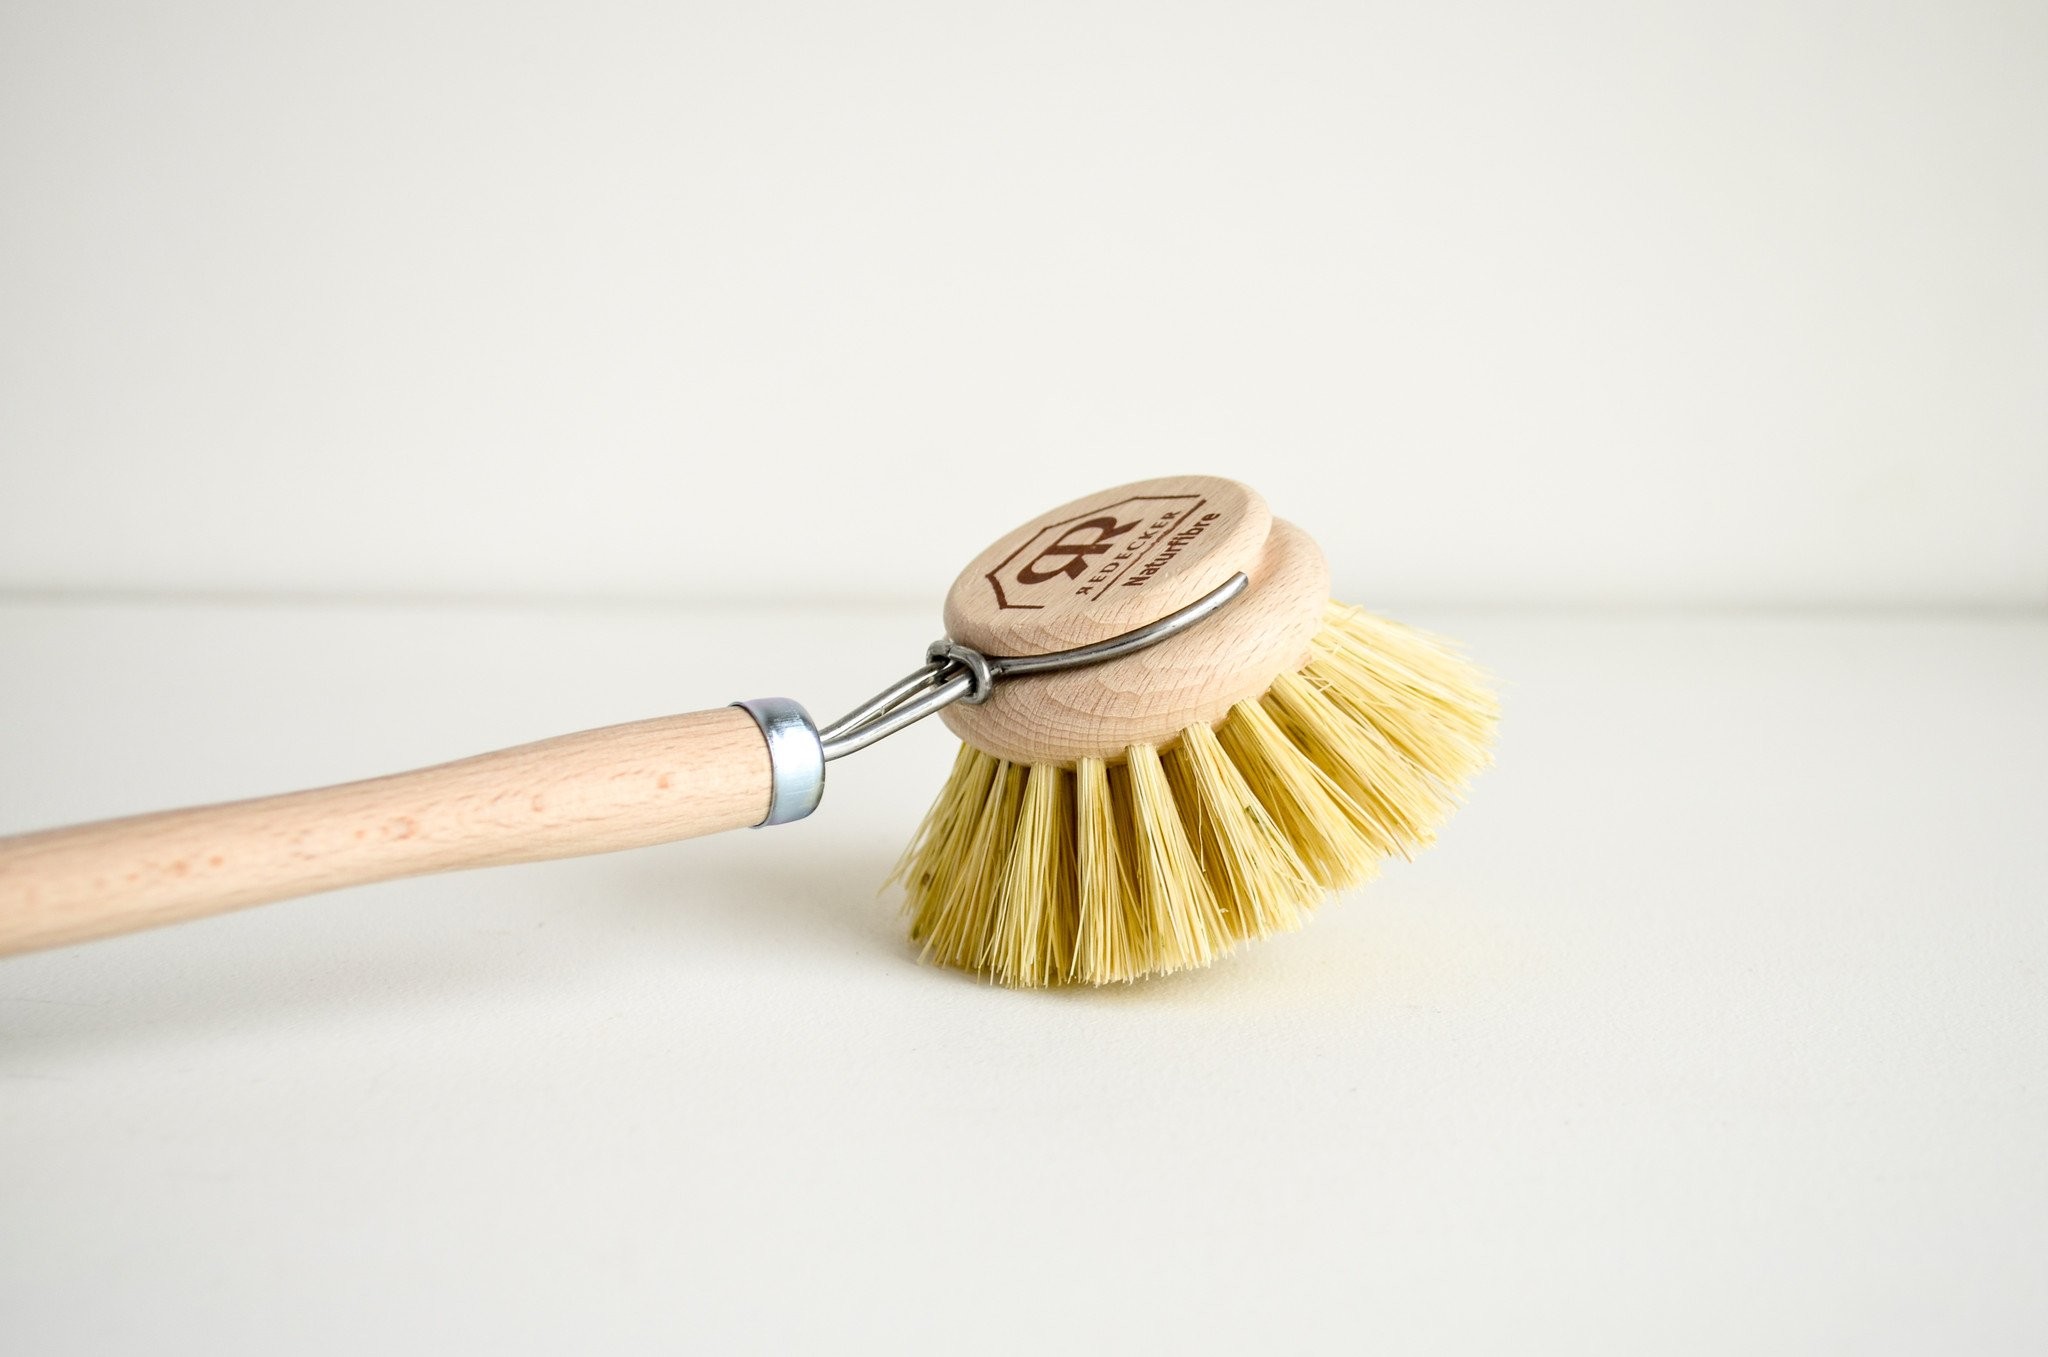 https://www.lalooma.ca/24079/hard-bristles-wooden-dishbrush-redecker.jpg